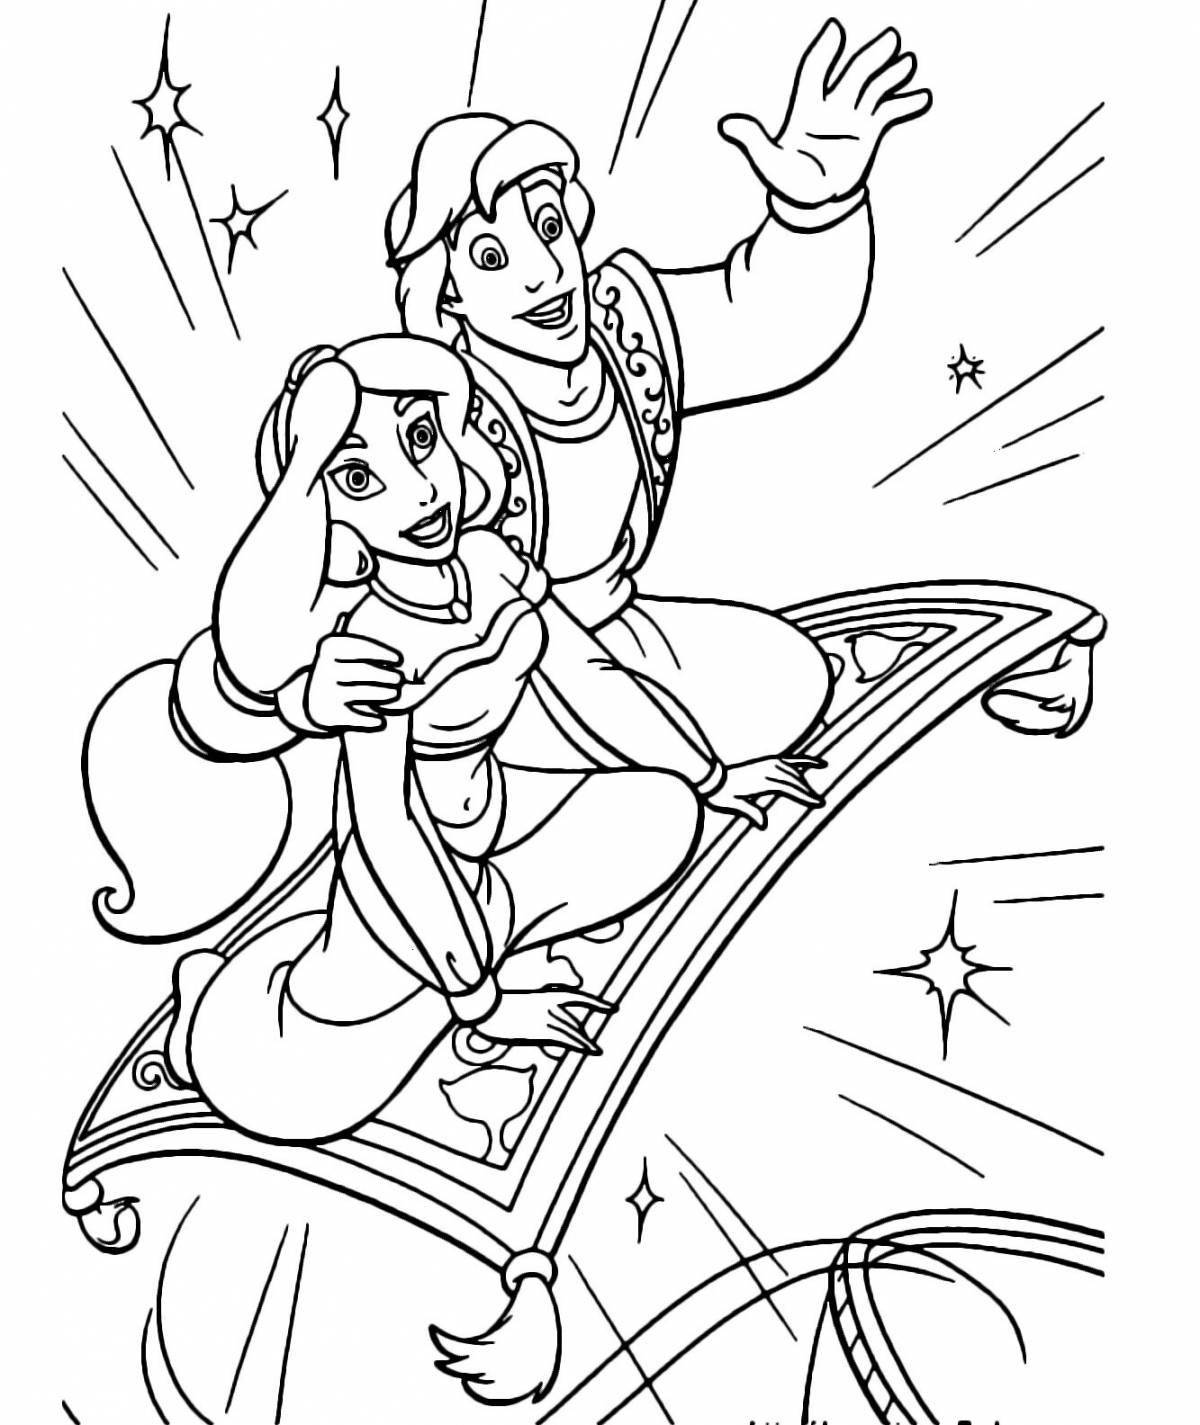 Merry Aladdin coloring book